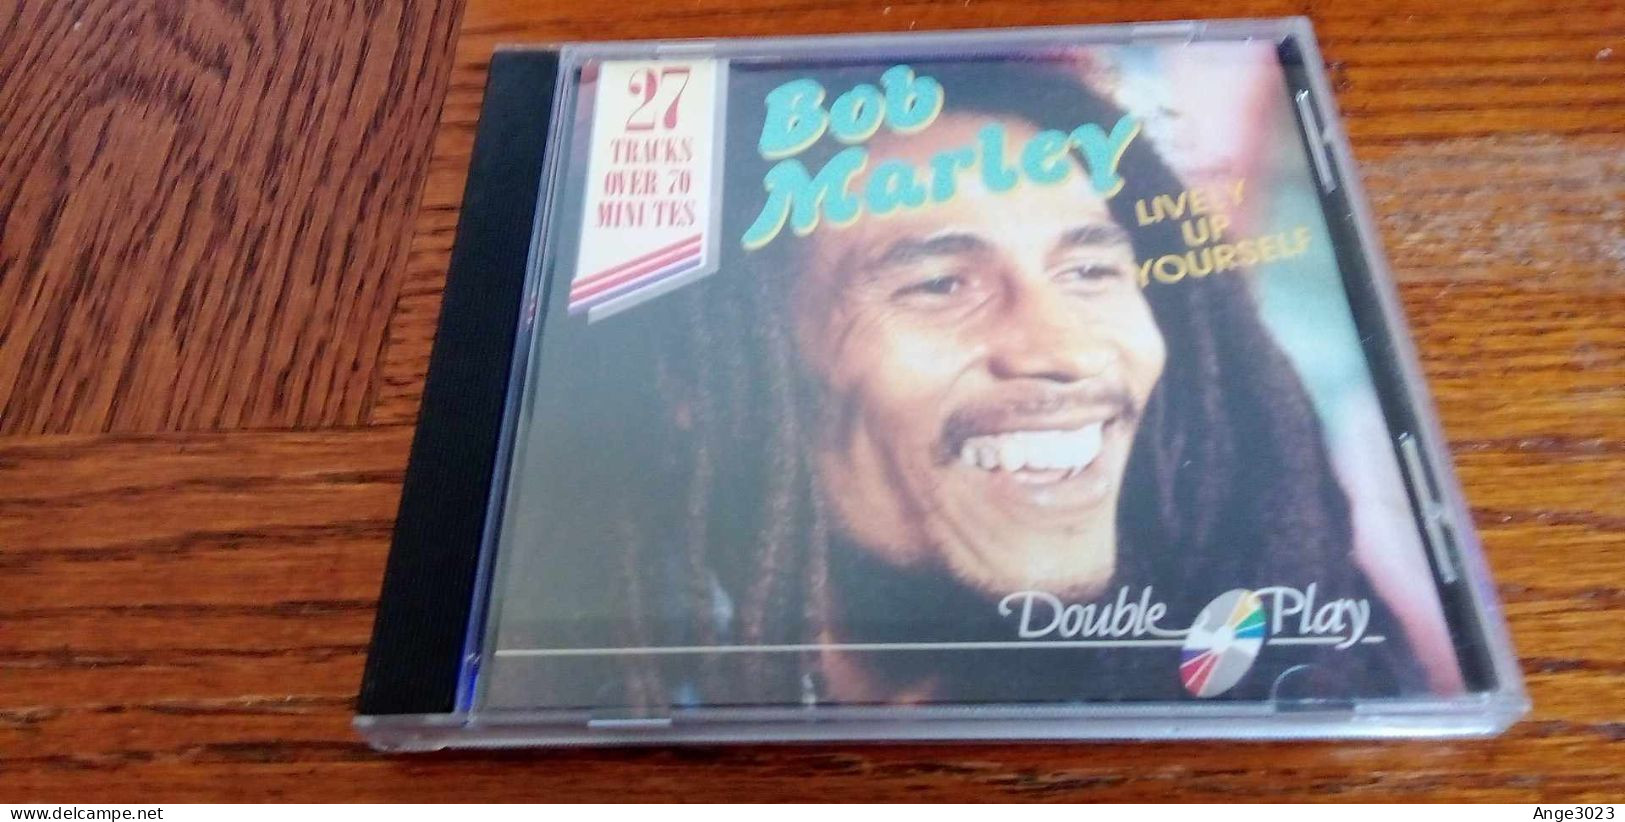 BOB MARLEY "lively Up Yourself" - Reggae